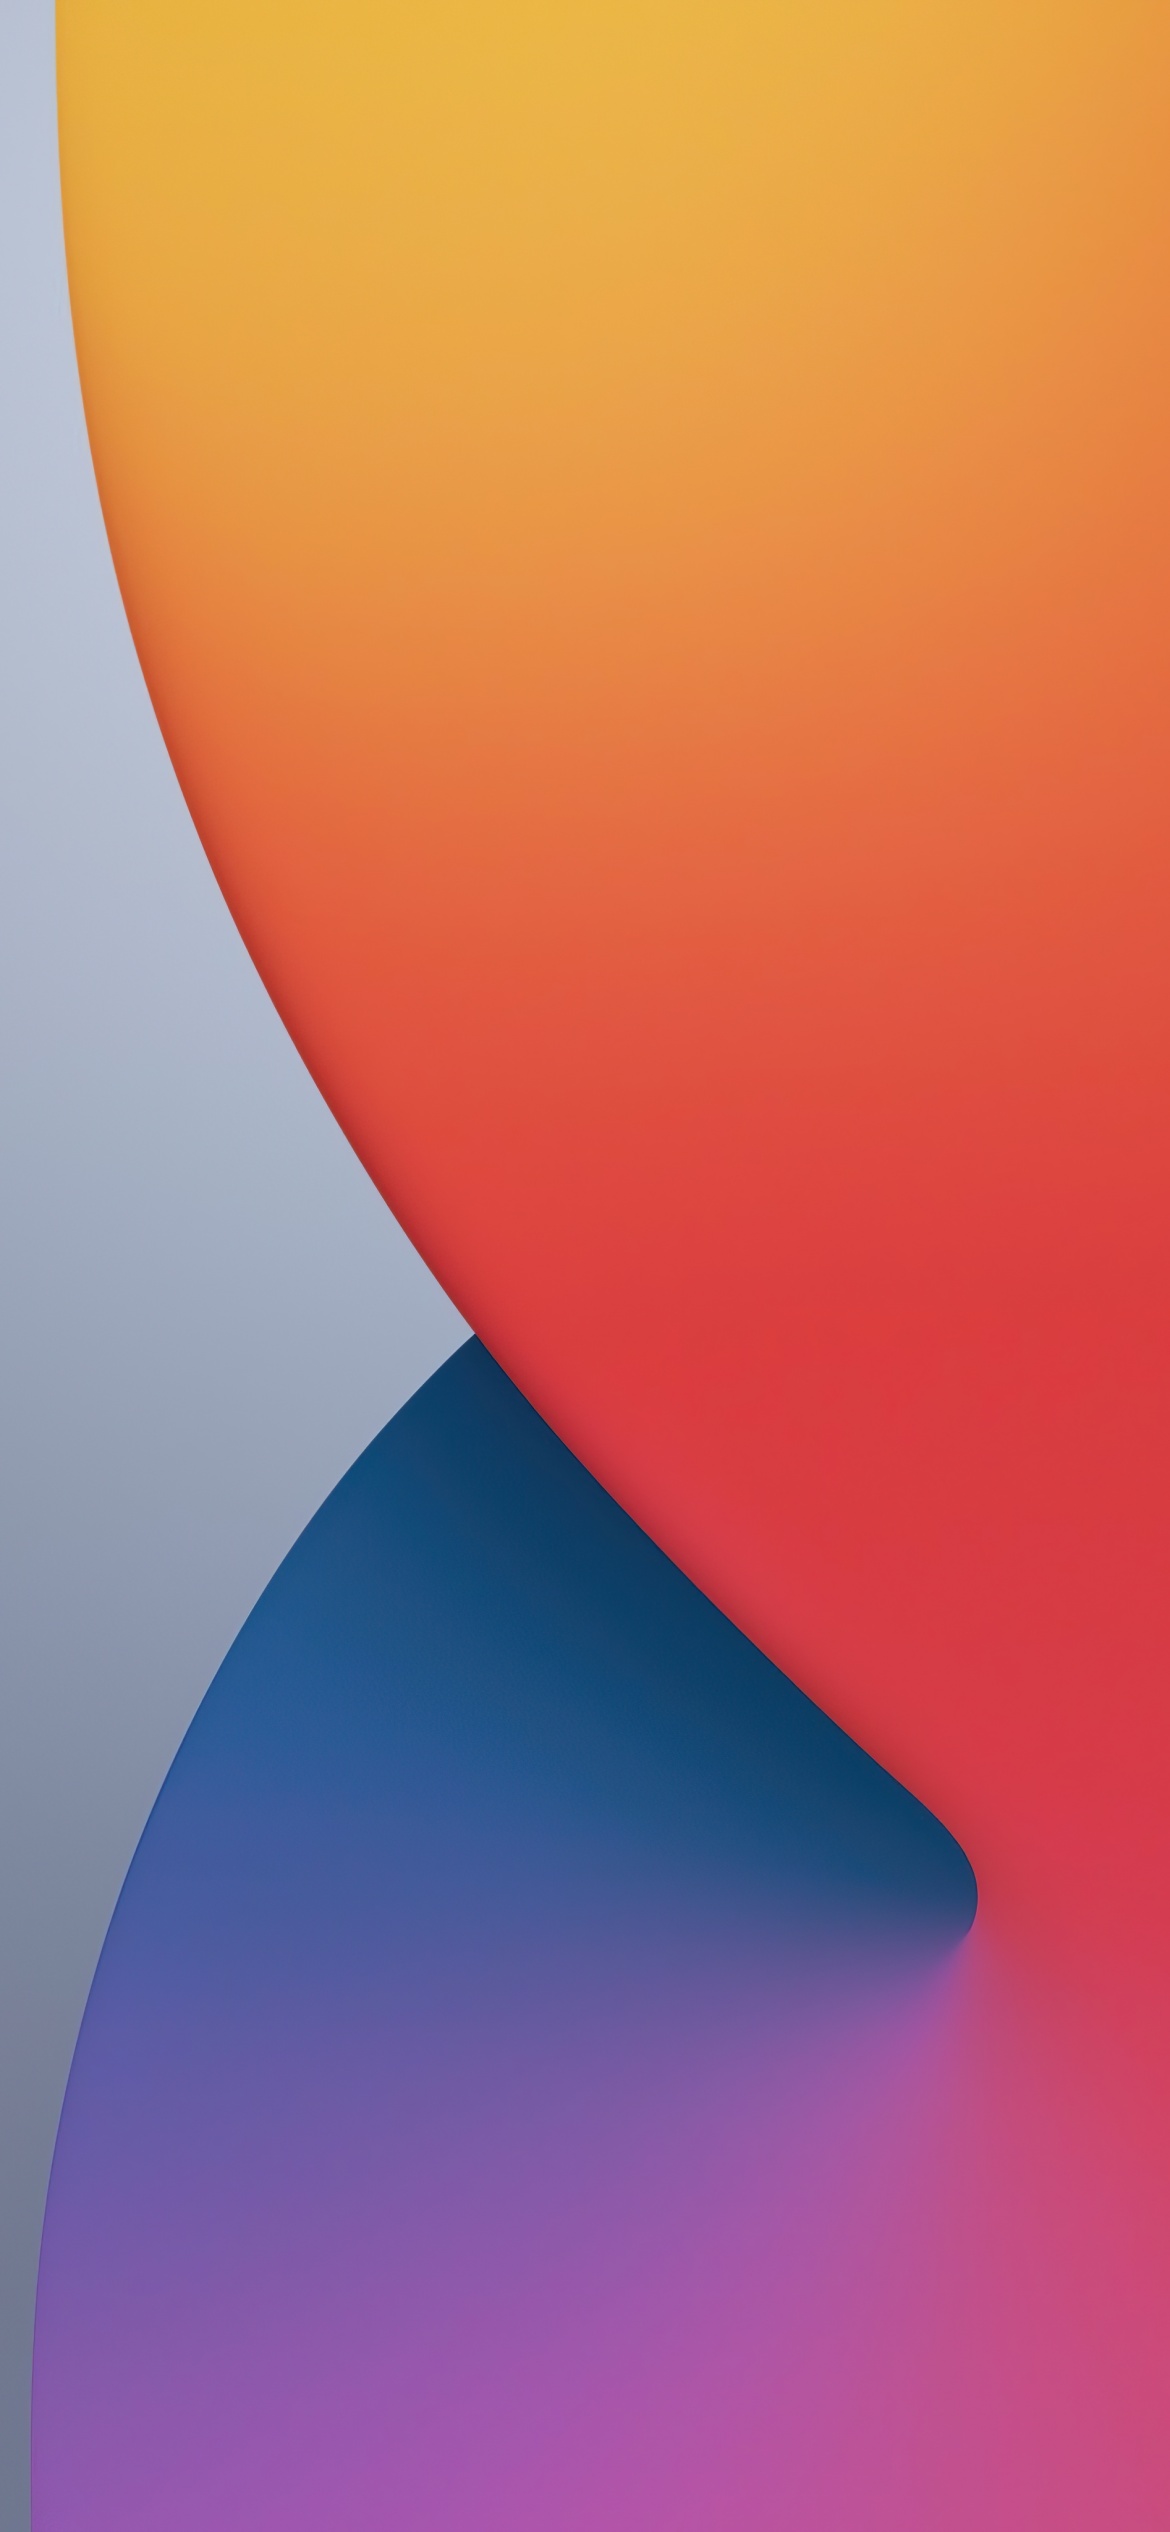 iOS 14 Wallpaper 4K, WWDC, 2020, iPhone 12, iPadOS, Stock, Gradients, #1433